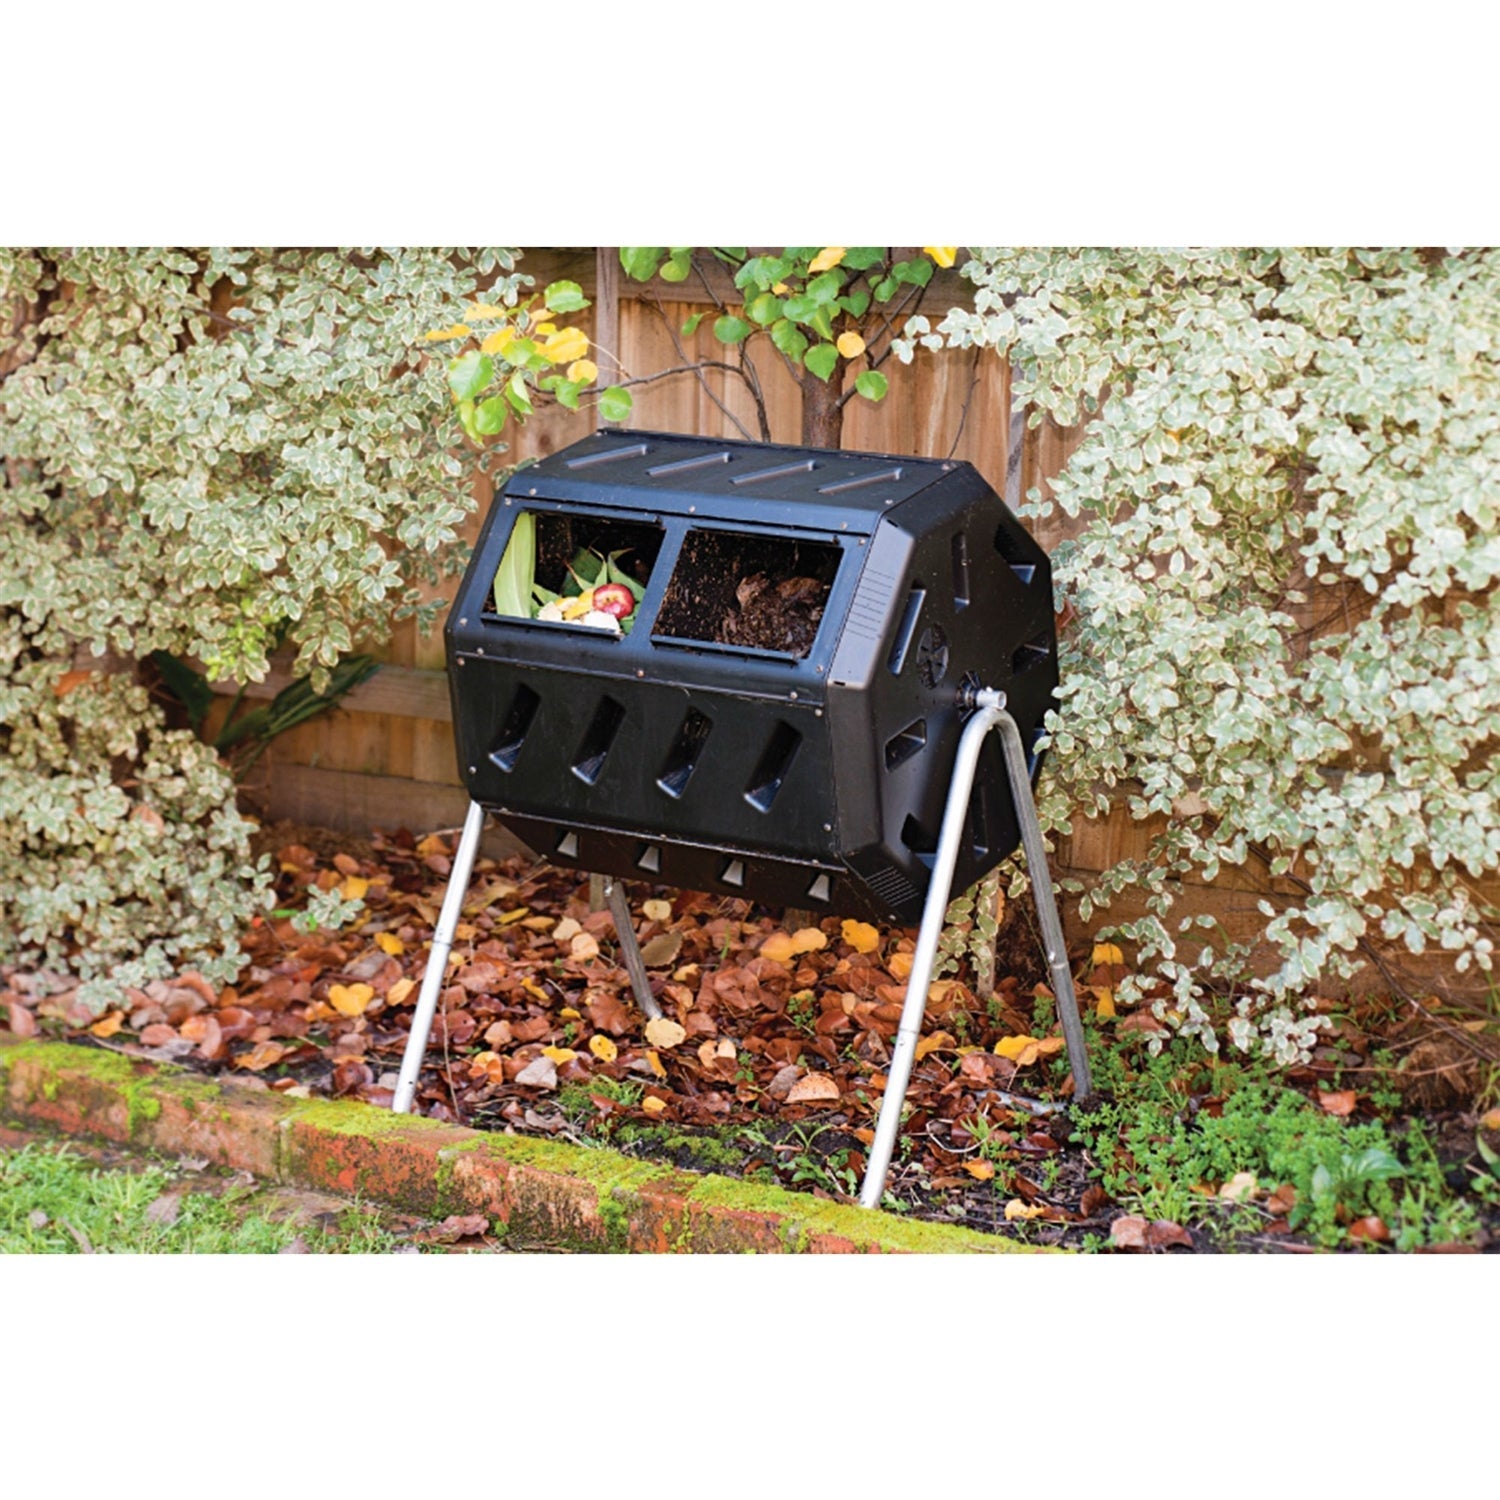 Outdoor > Gardening > Compost Bins - 37-Gallon Tumbling Compost Bin Tumbler Composter - 5 Cu. Ft.